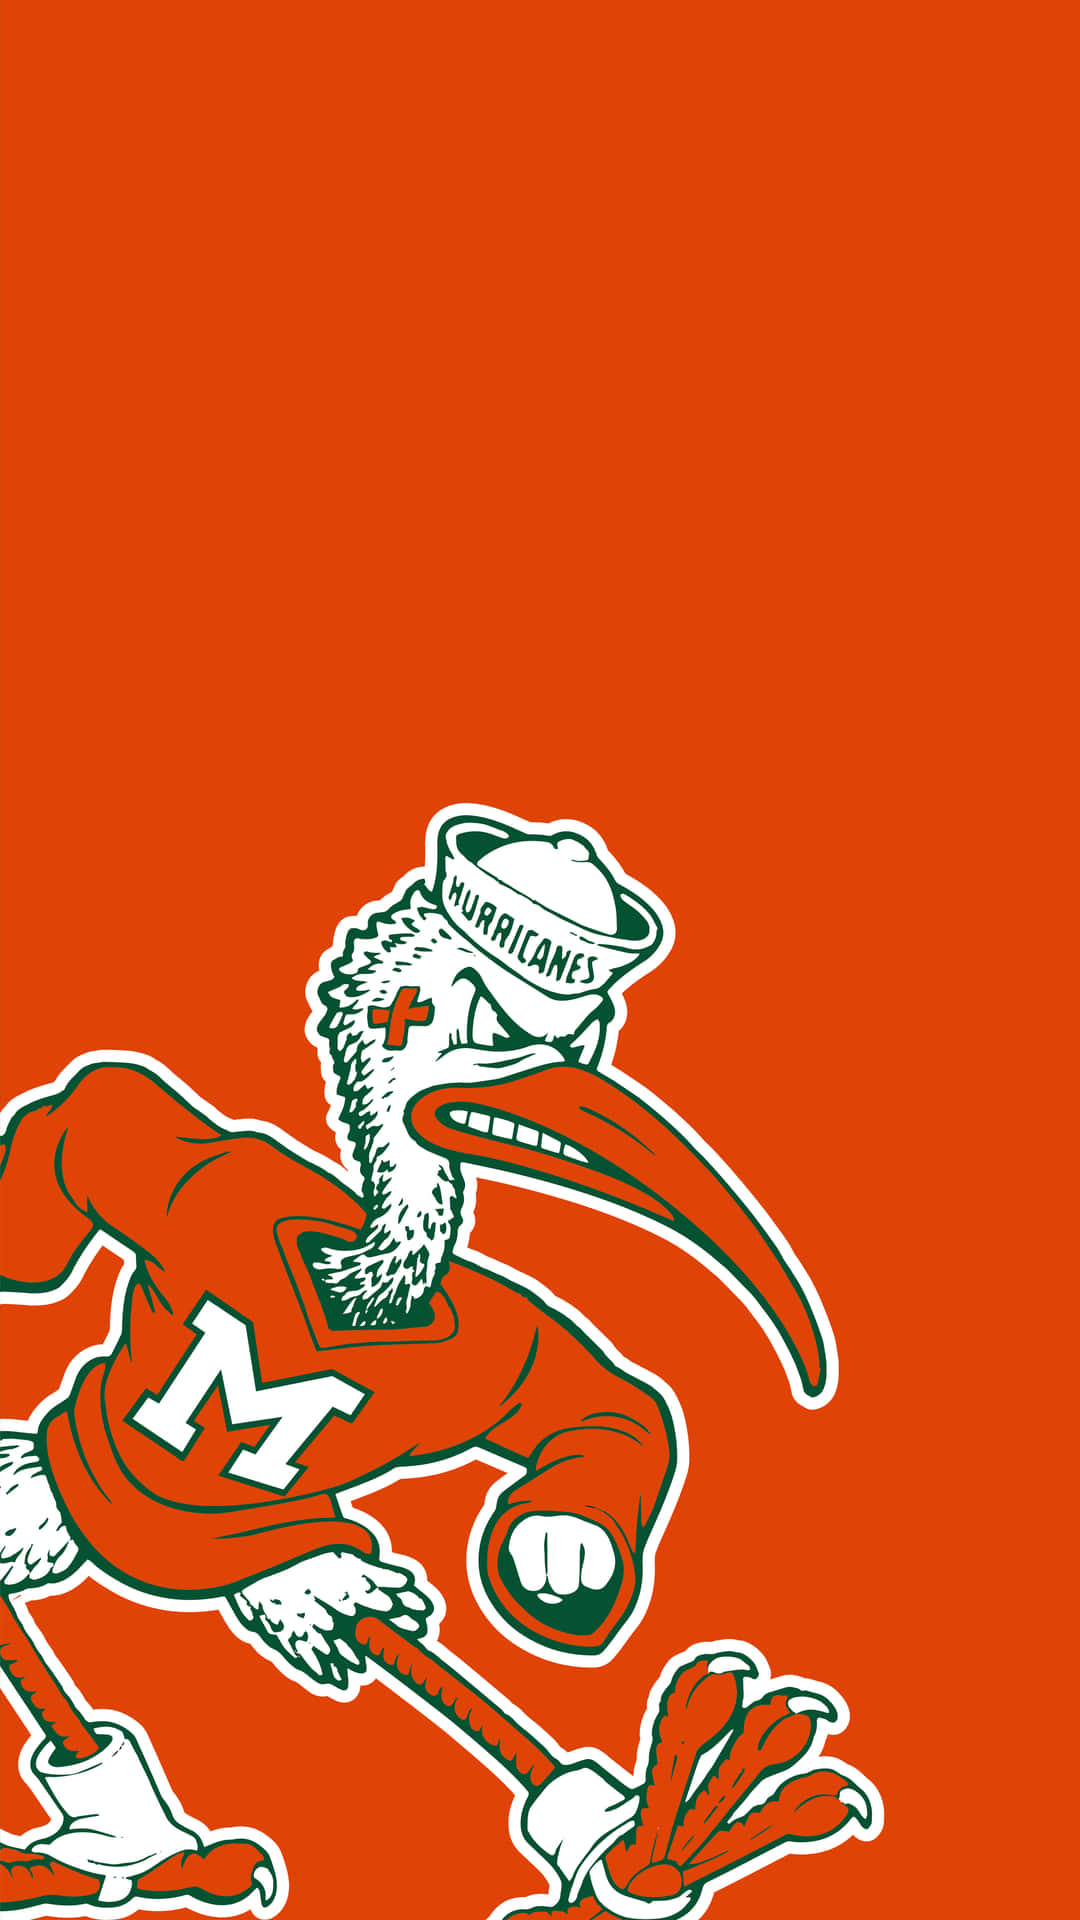 Miamihurricanes Sebastian Mascot Orange Can Be Translated To Italian As 